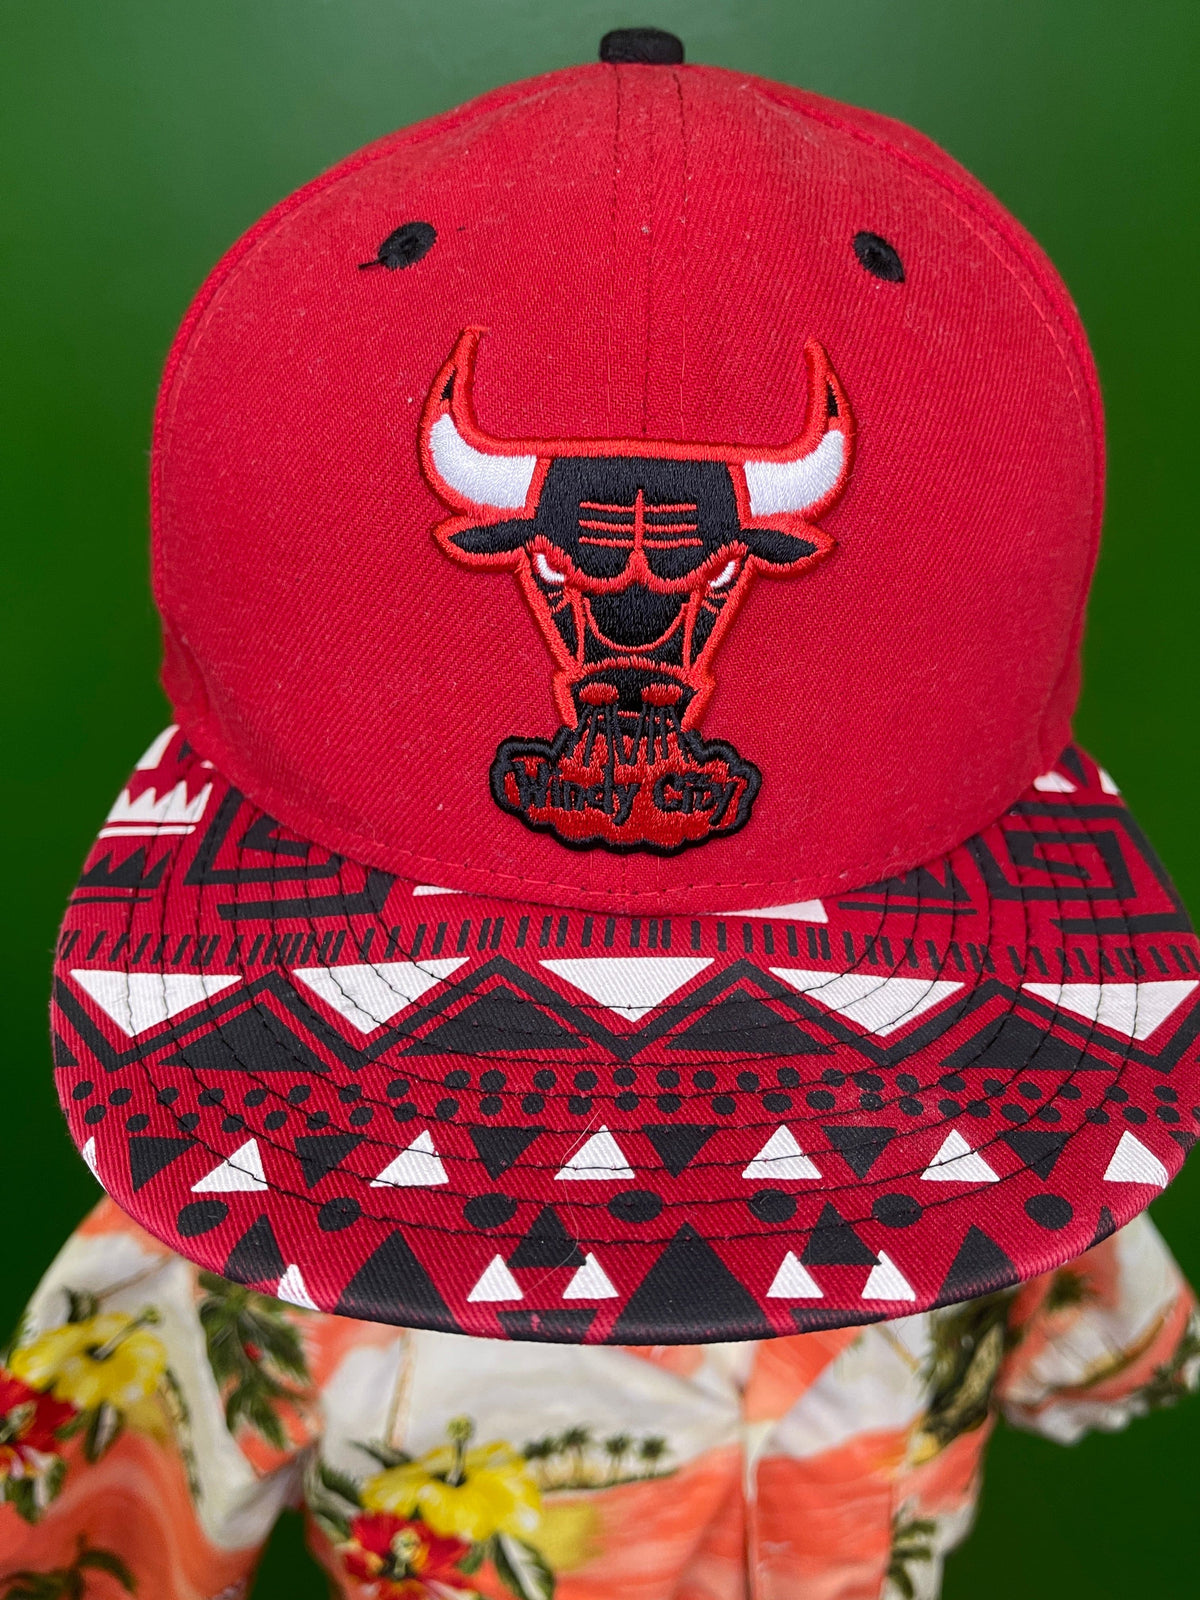 NBA Chicago Bulls New Era 9FIFTY Hat/Cap Snapback OSFM`